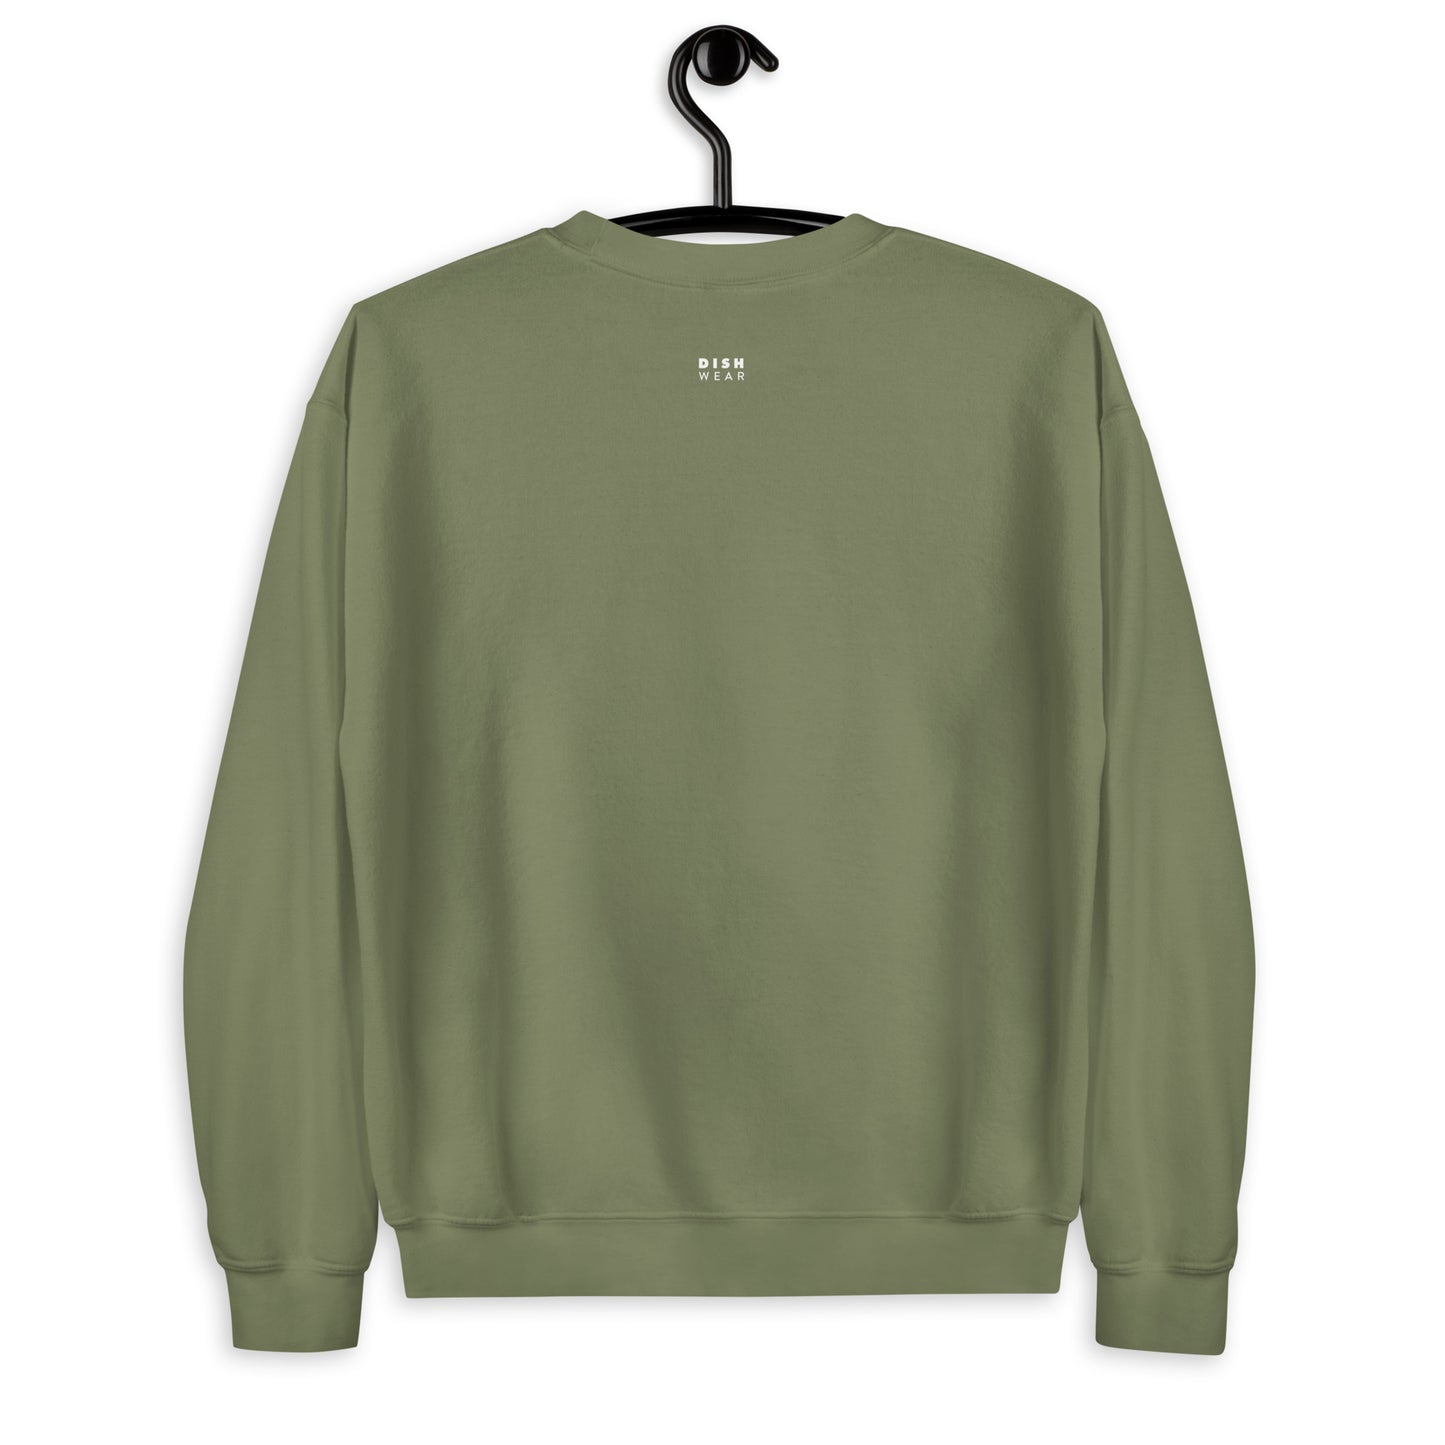 Green Bean Casserole Sweatshirt - Arched Font